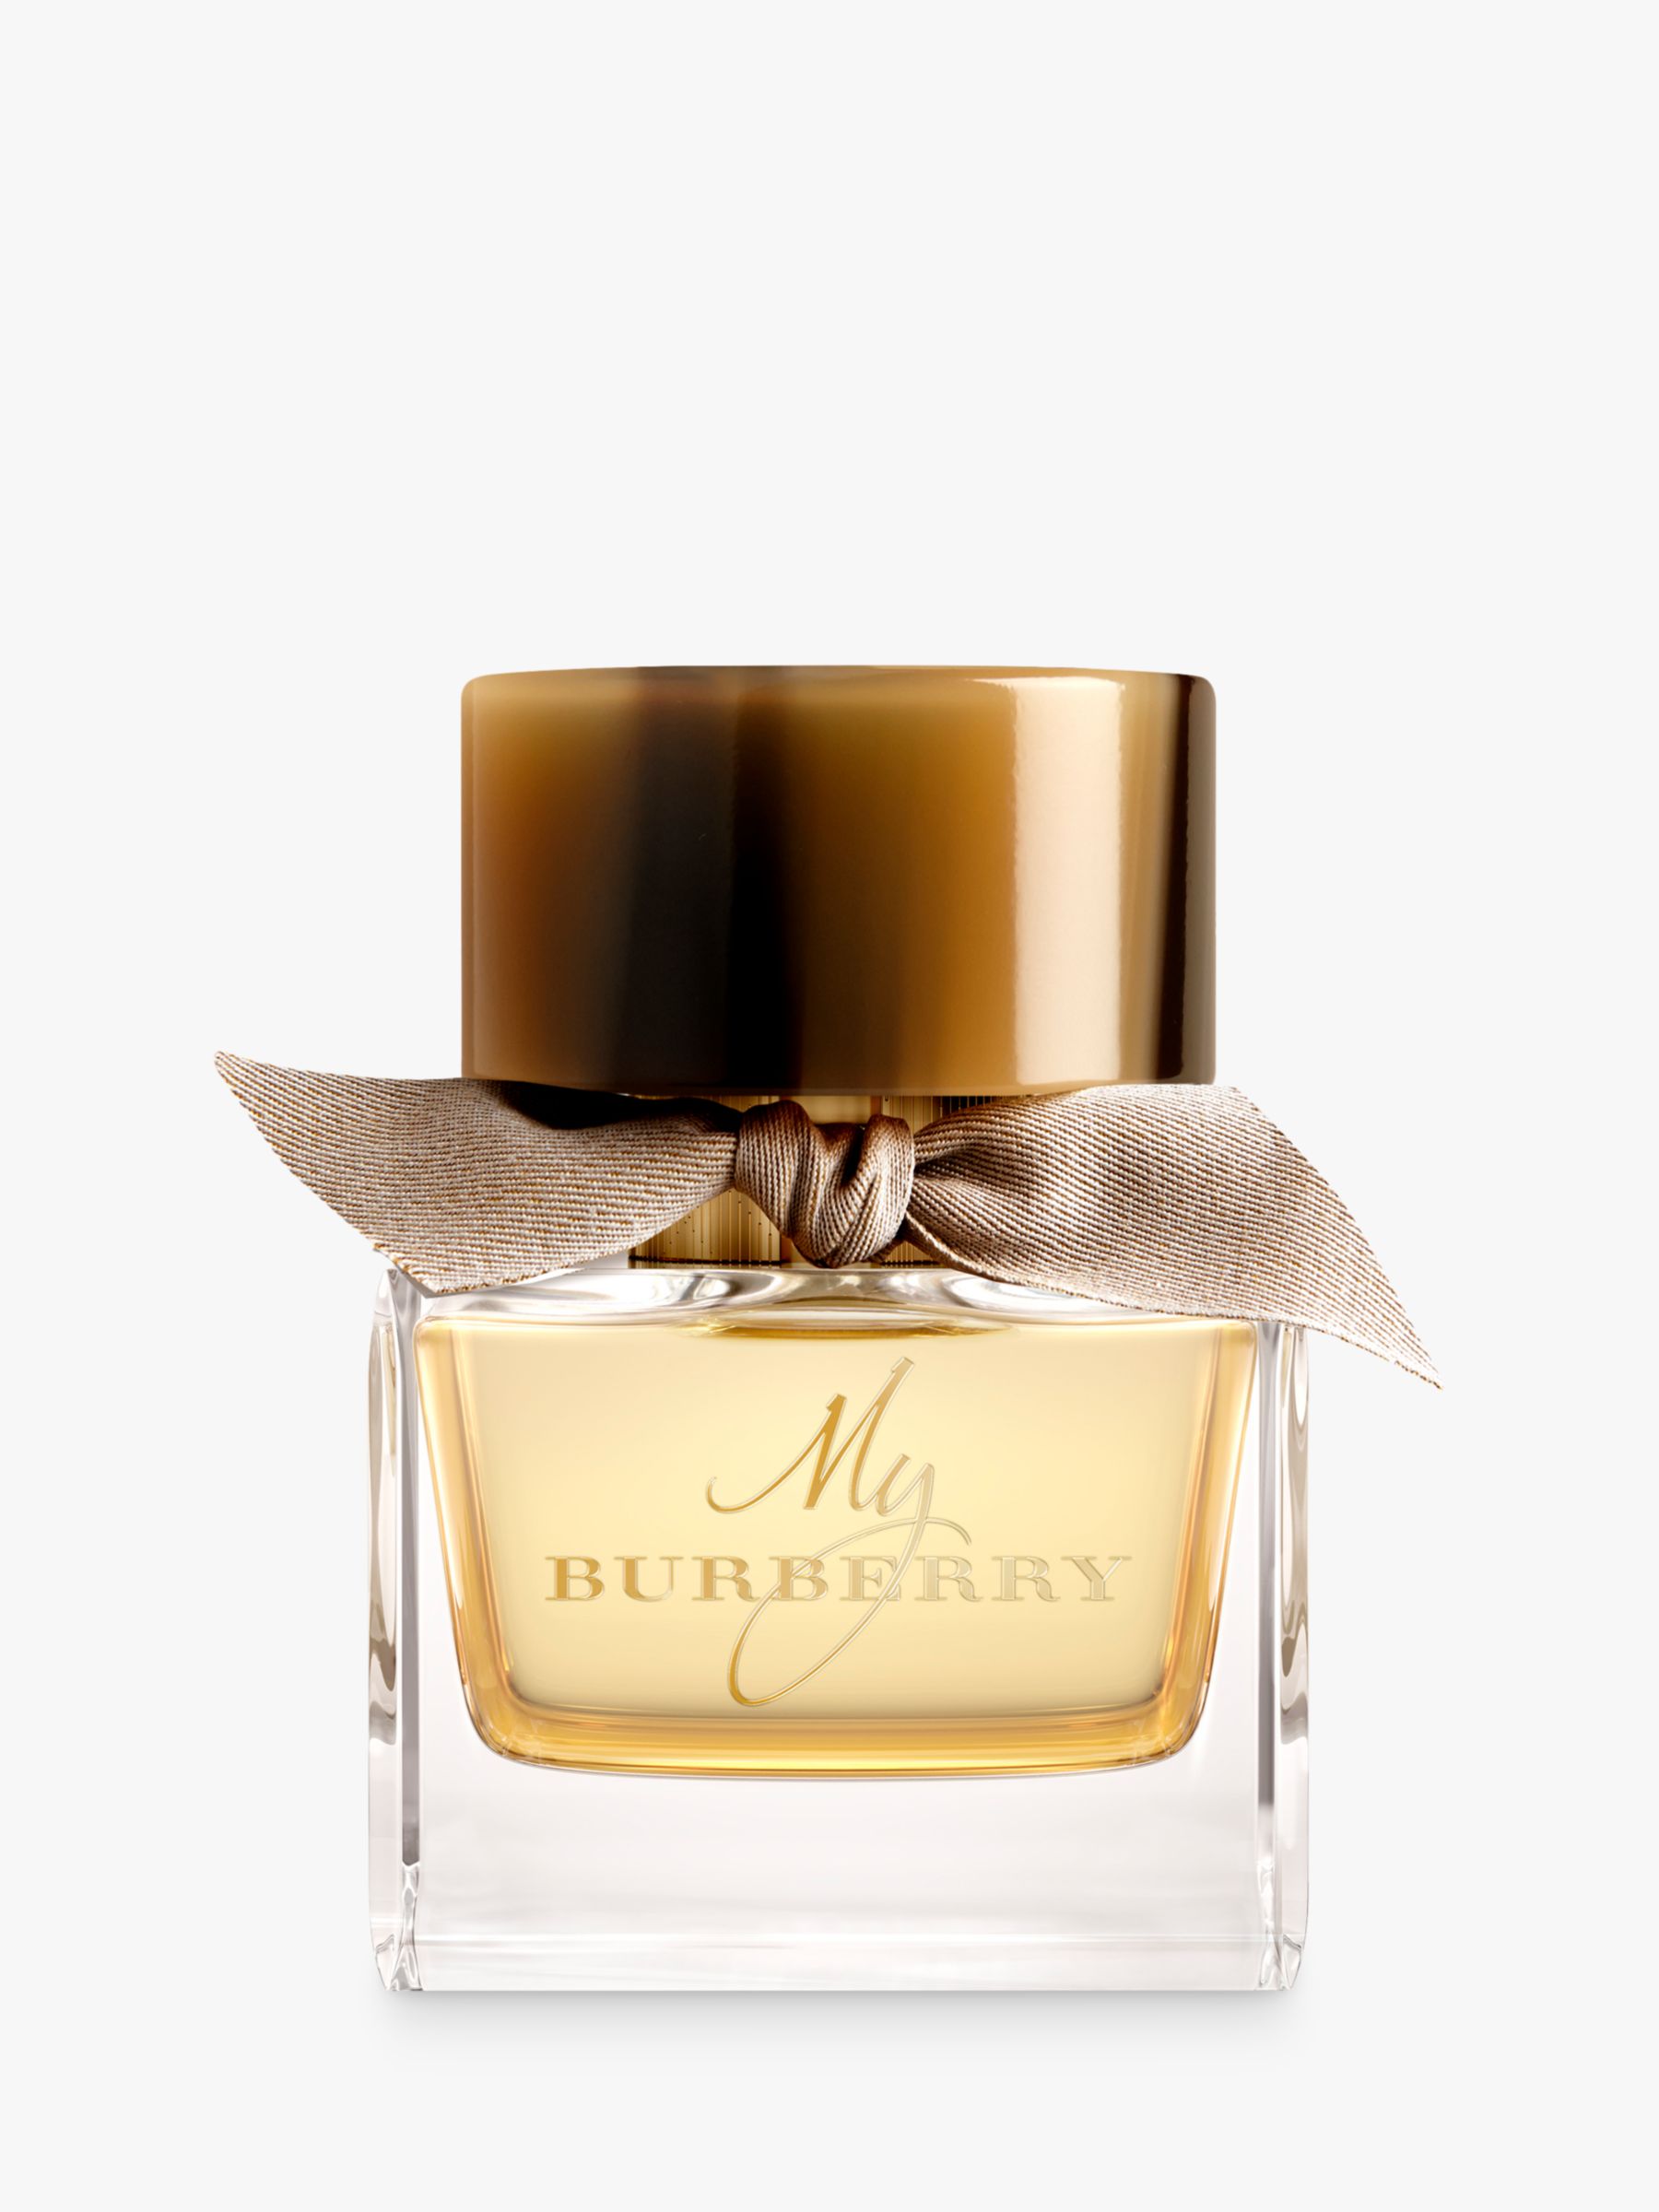 Burberry My Burberry Eau de Parfum, 30ml at John Lewis & Partners